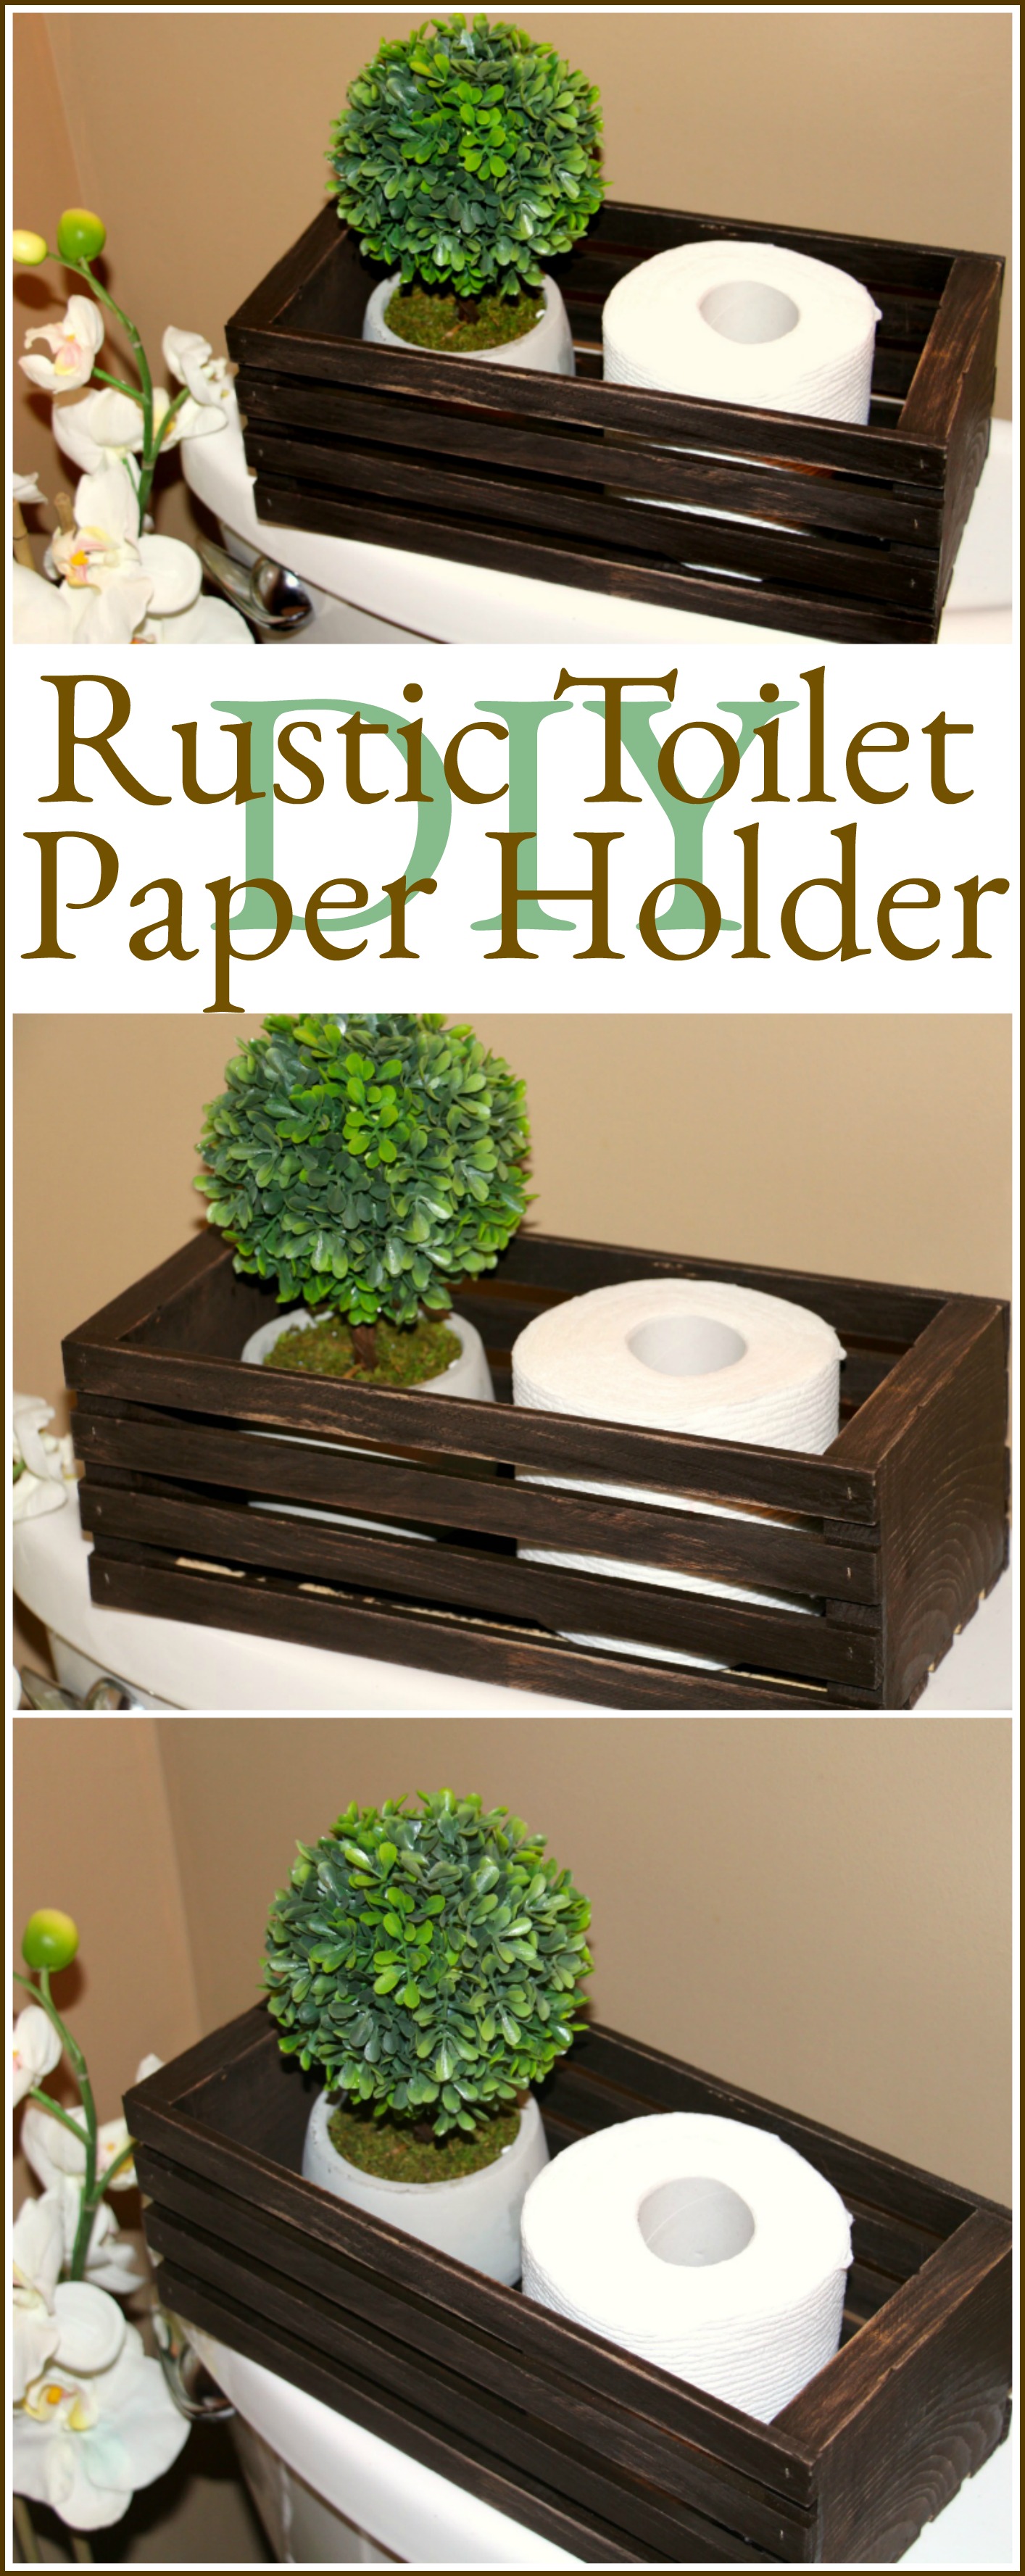 DIY Rustic Toilet Paper Holder